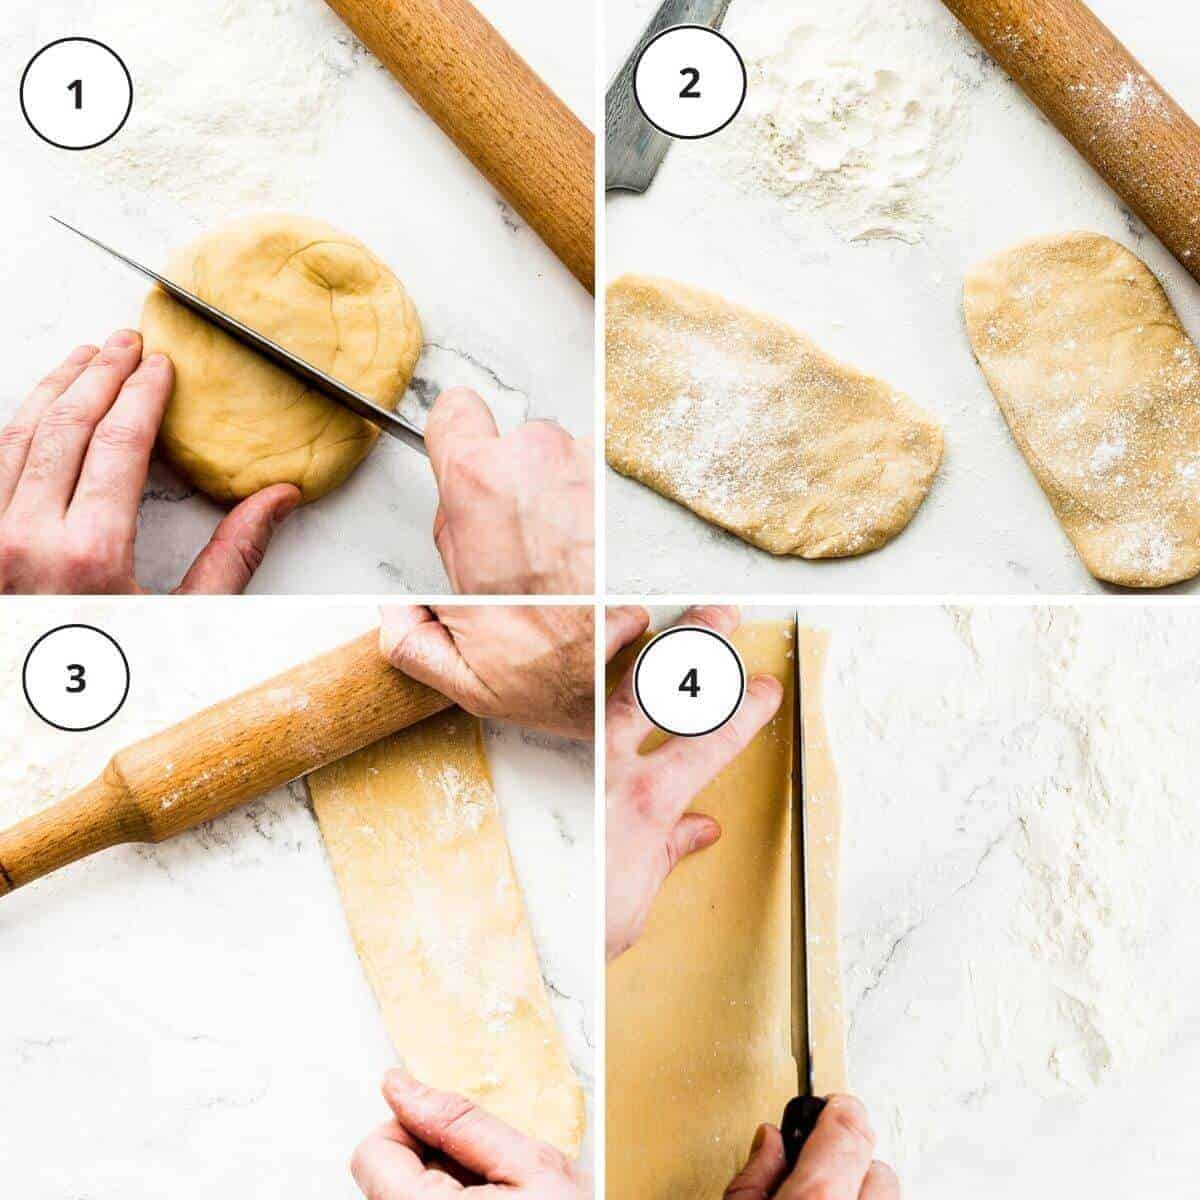 https://www.pantsdownapronson.com/wp-content/uploads/how-to-roll-and-cut-fresh-pasta-dough.jpg